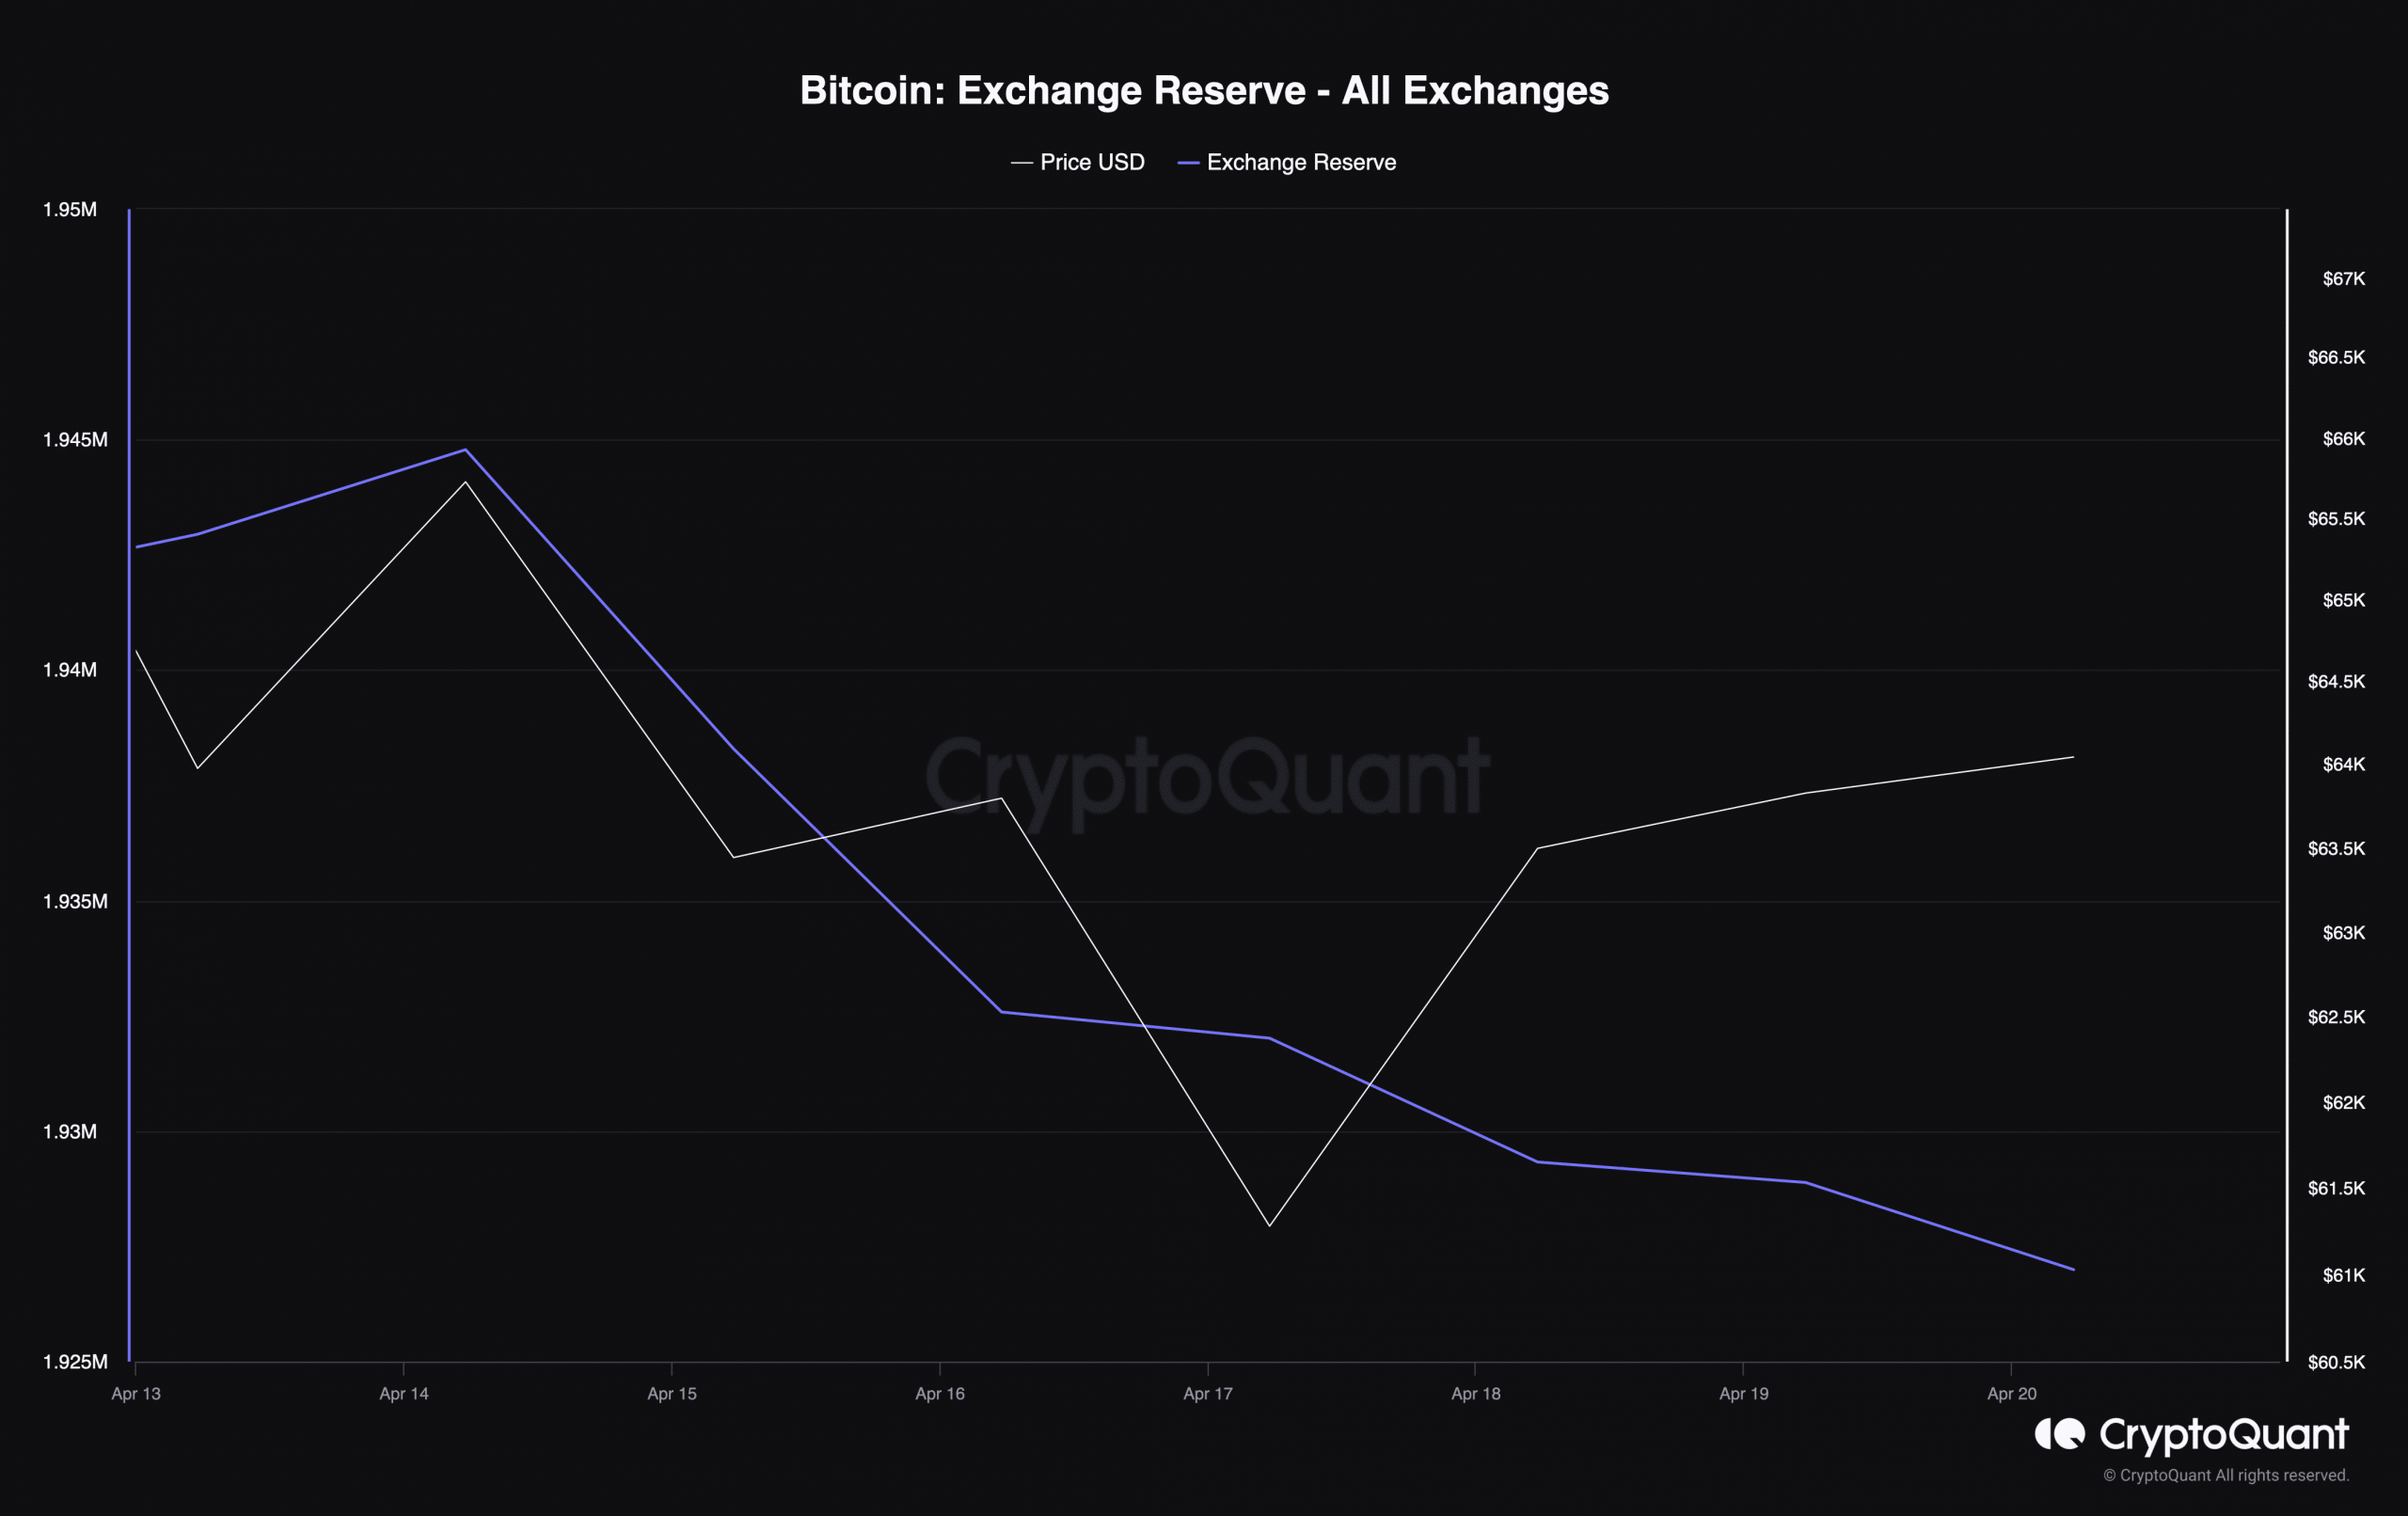 BTC's exchange reserve dropped